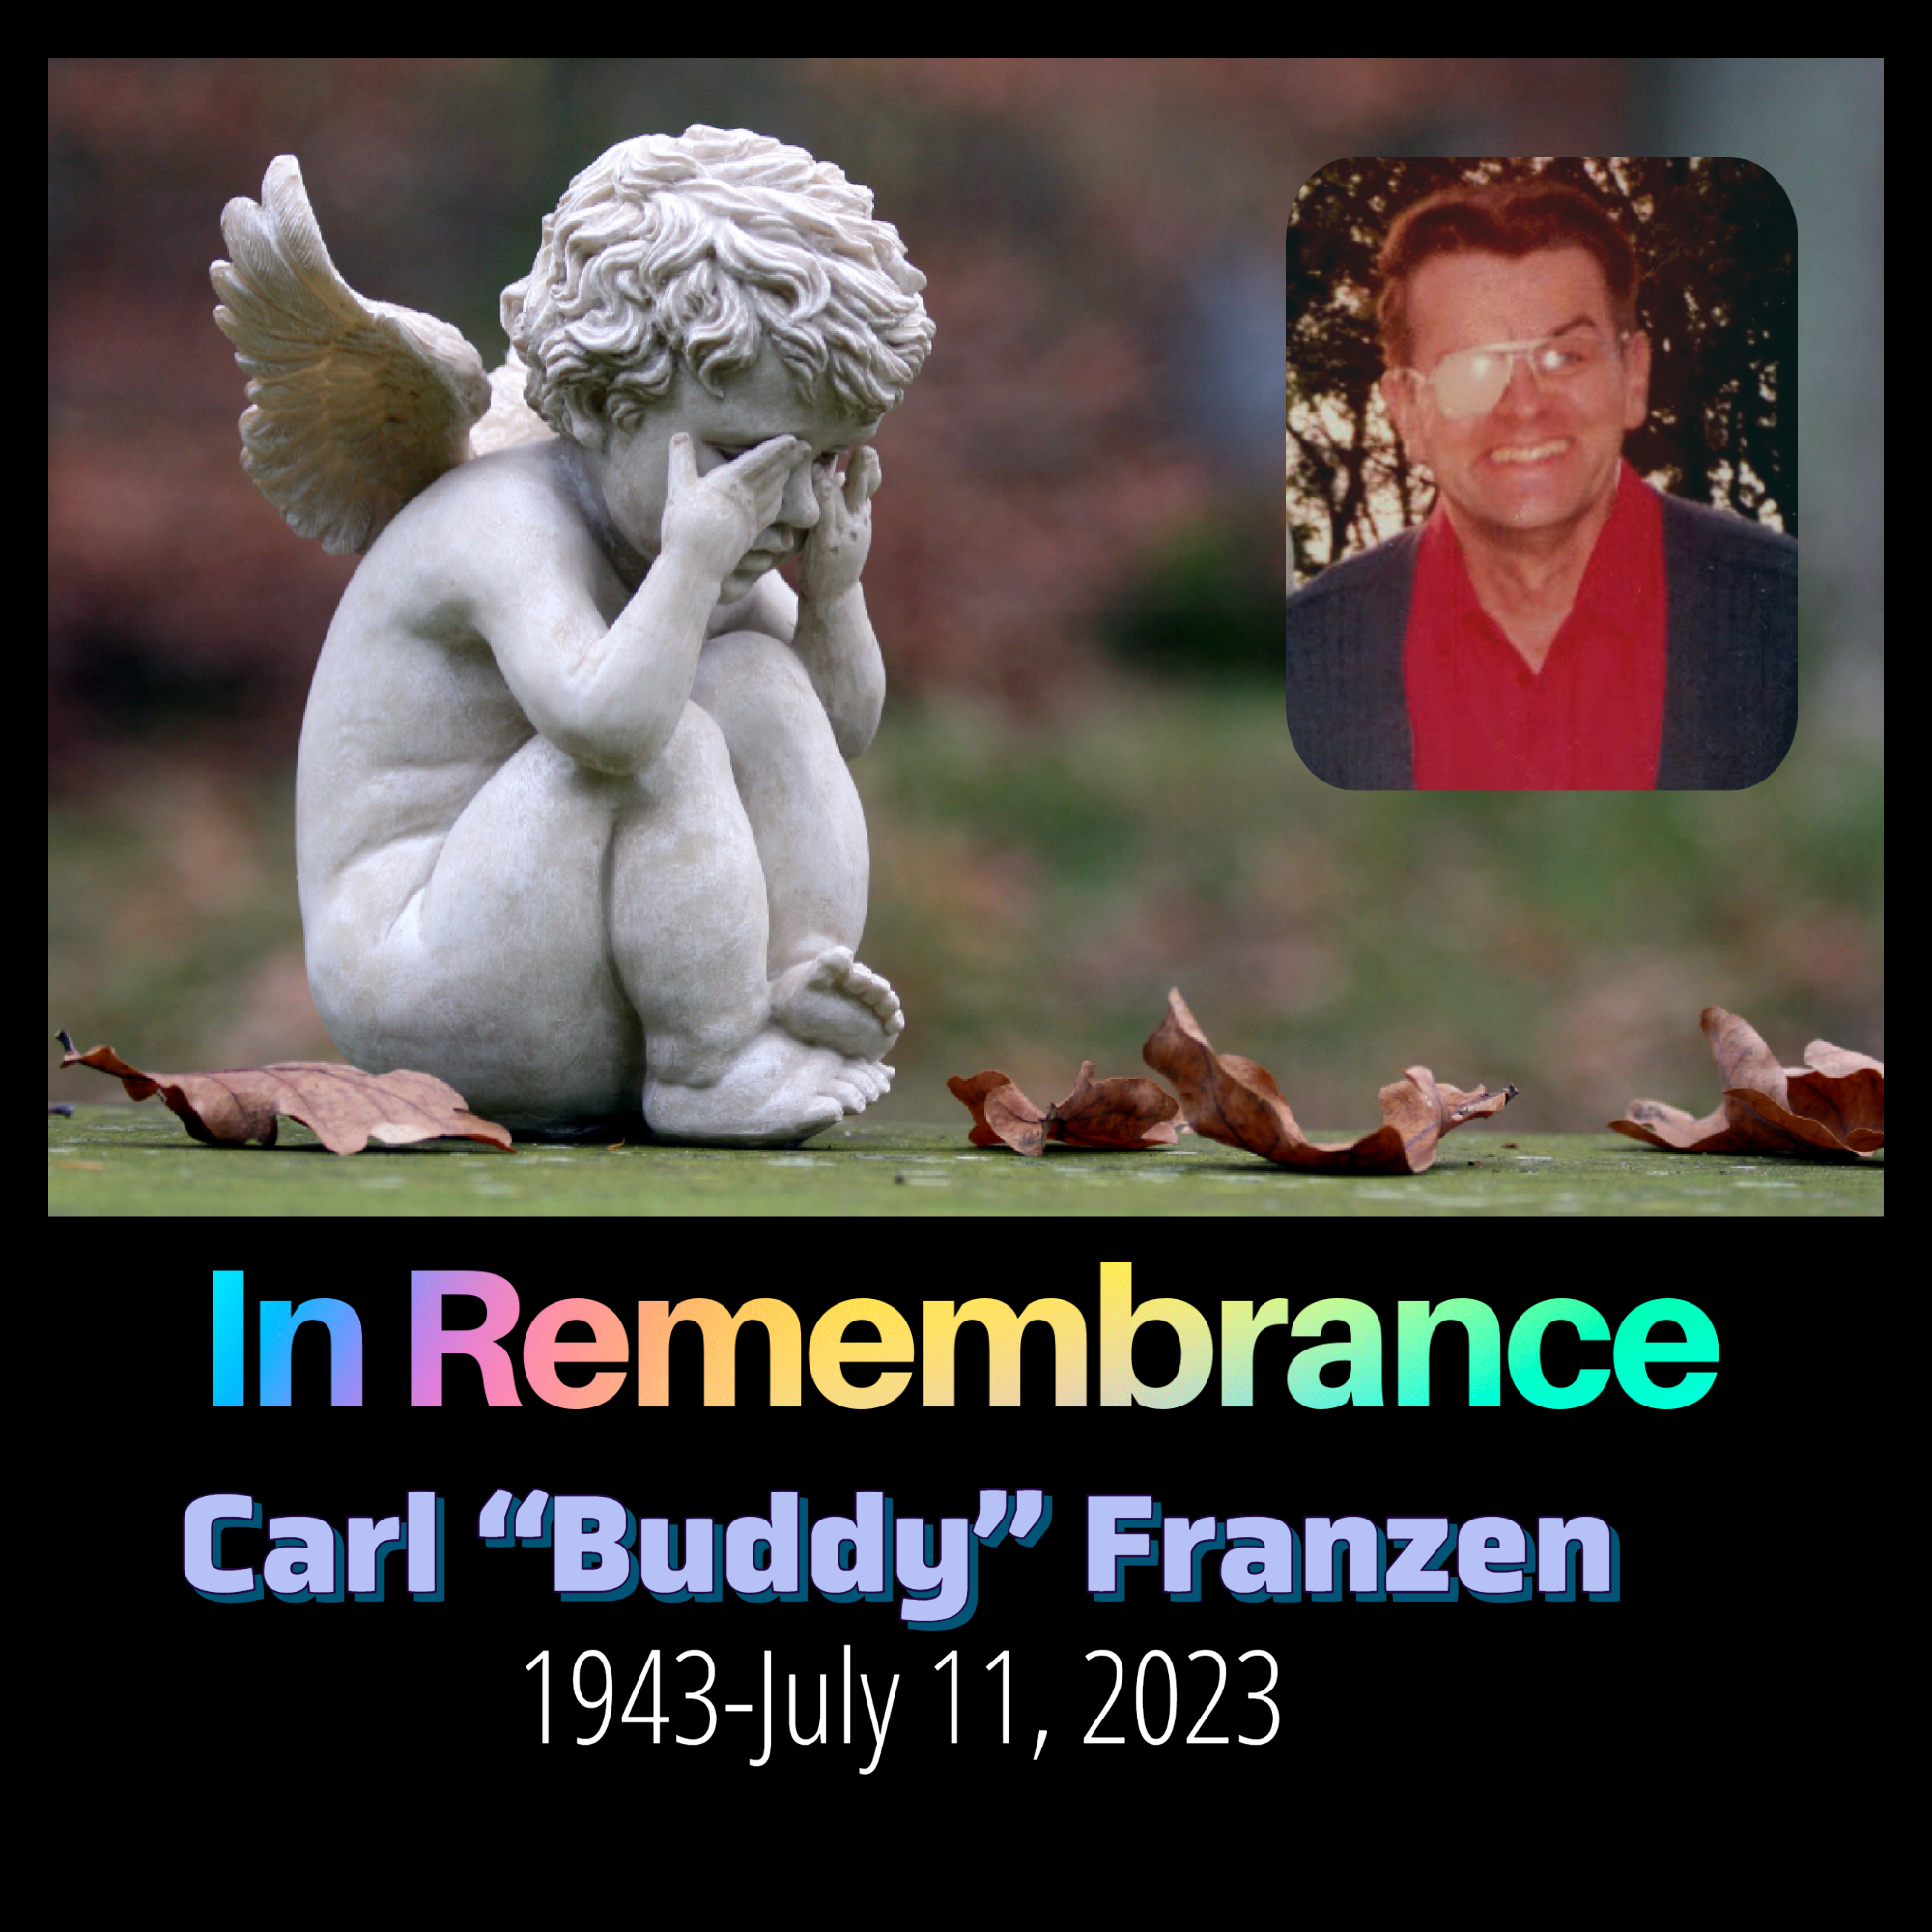 In Remembrance Carl "Buddy" Franzen, 1943-2023